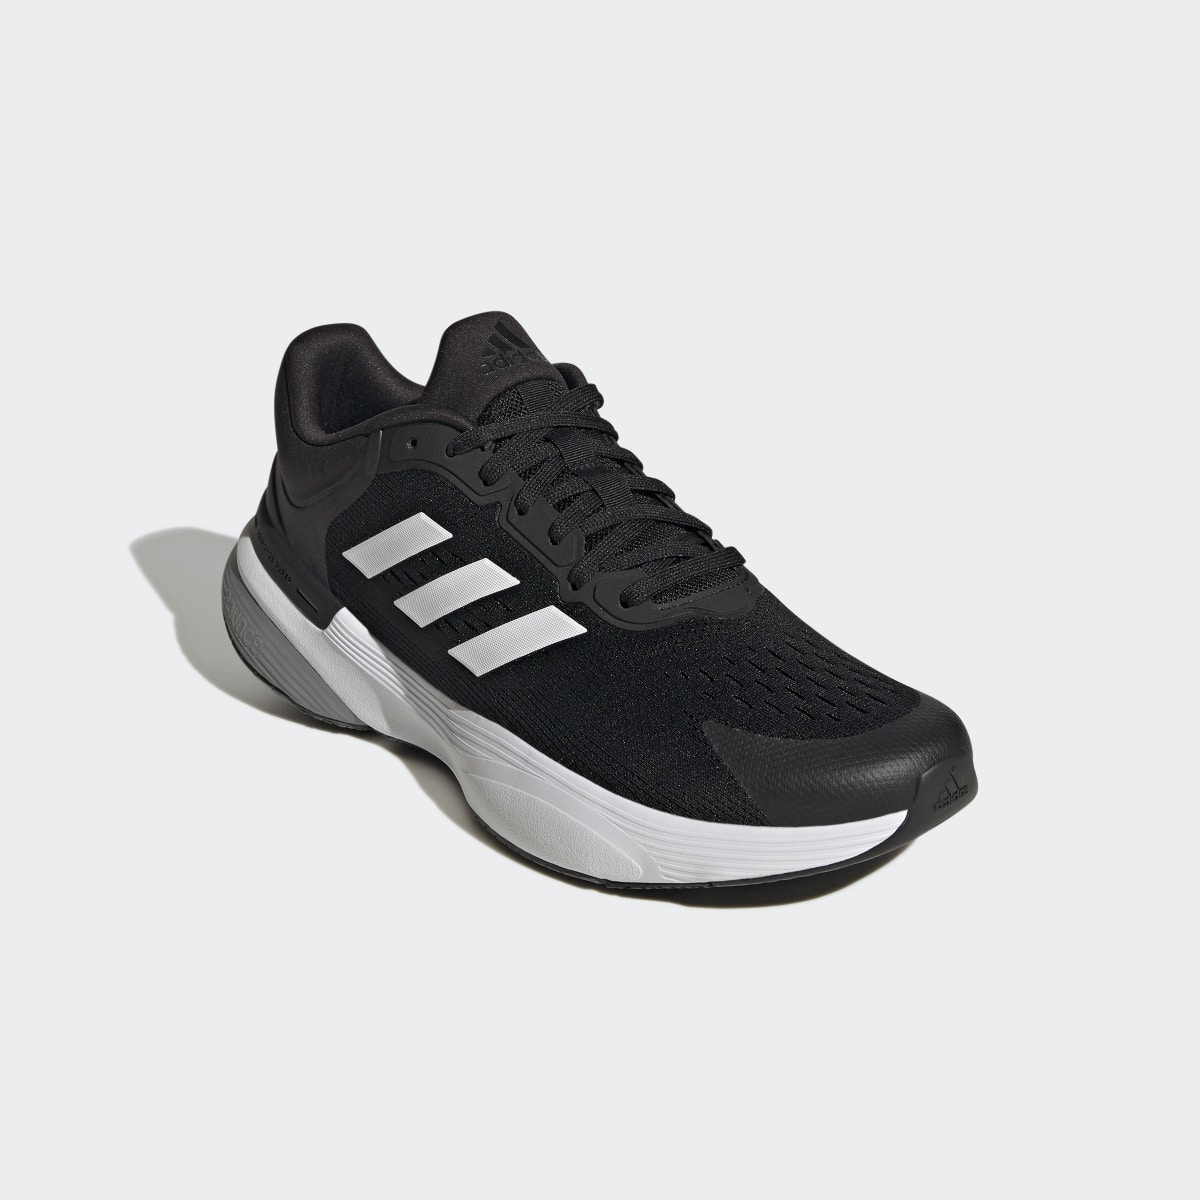 Adidas Response Super 3.0 Running Shoes. 5